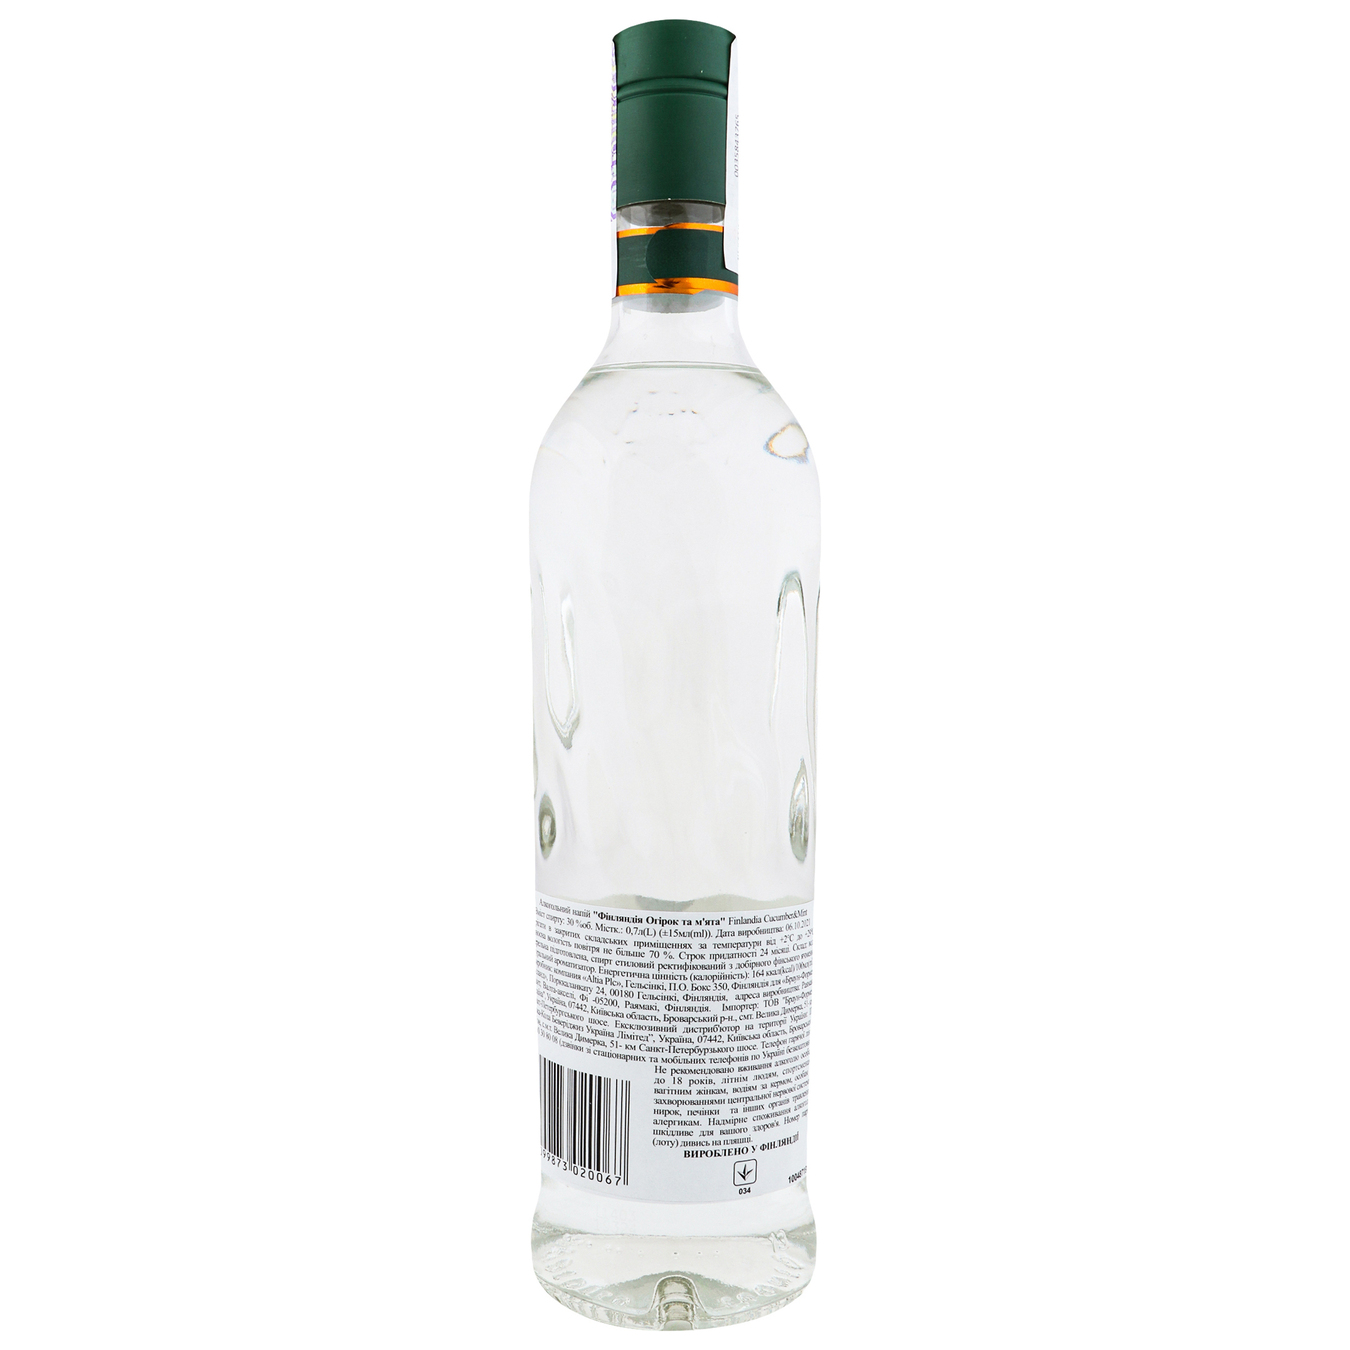 Finlandia Cucumber&Mint vodka 30% 0.7l 2